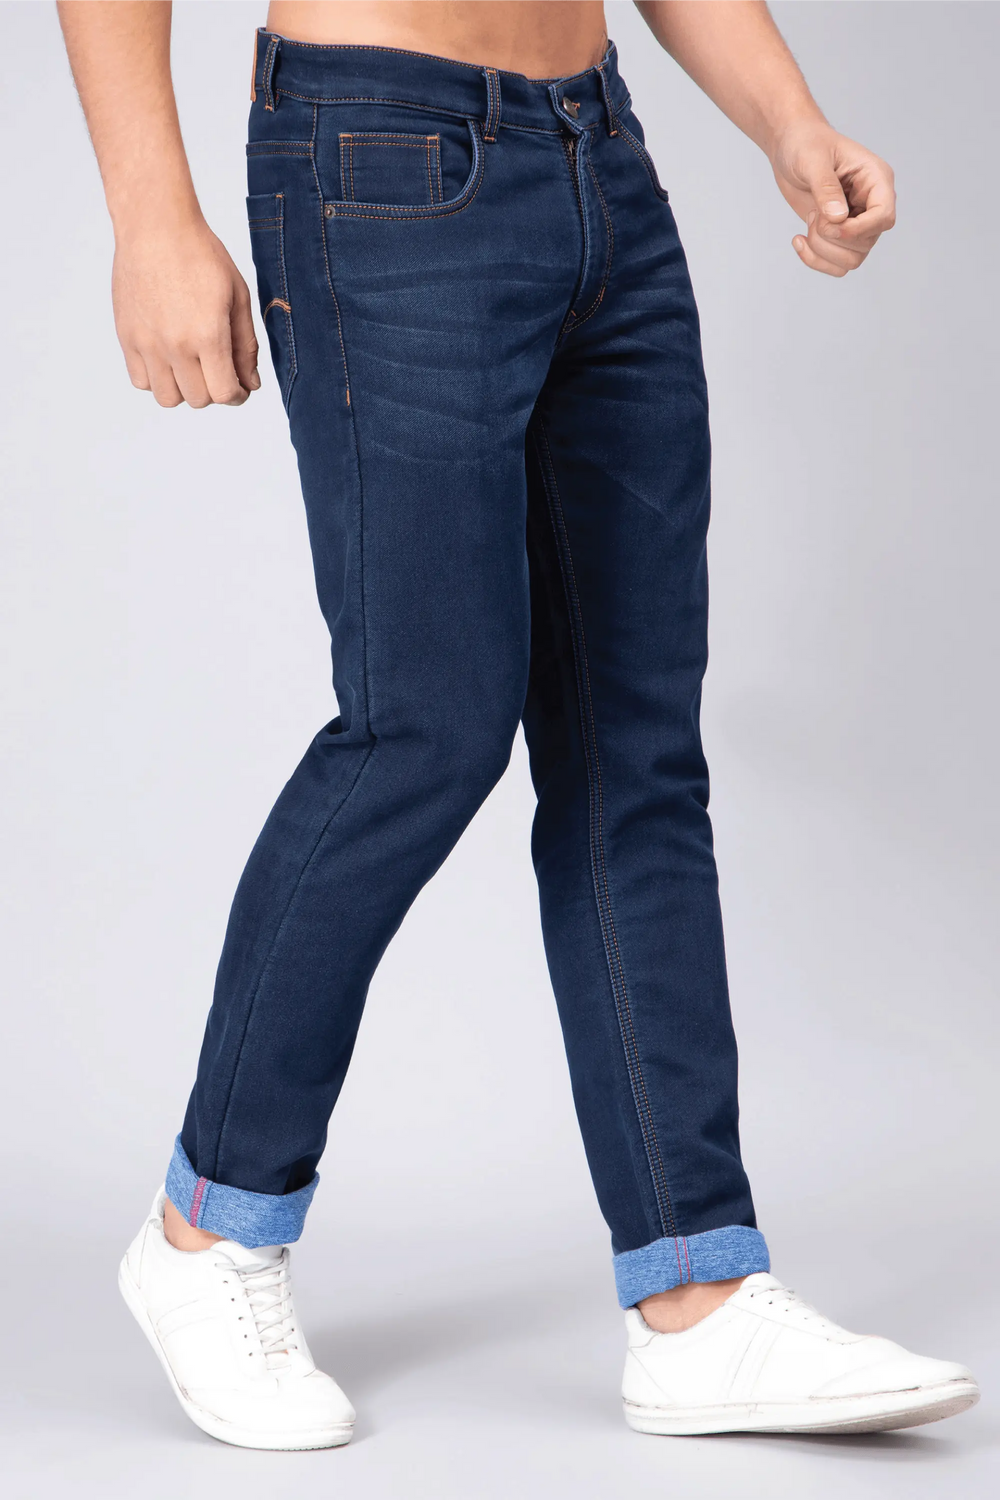 Men's Slim Fit Dark Blue Stretchable Denim Jeans - Peplos Jeans 